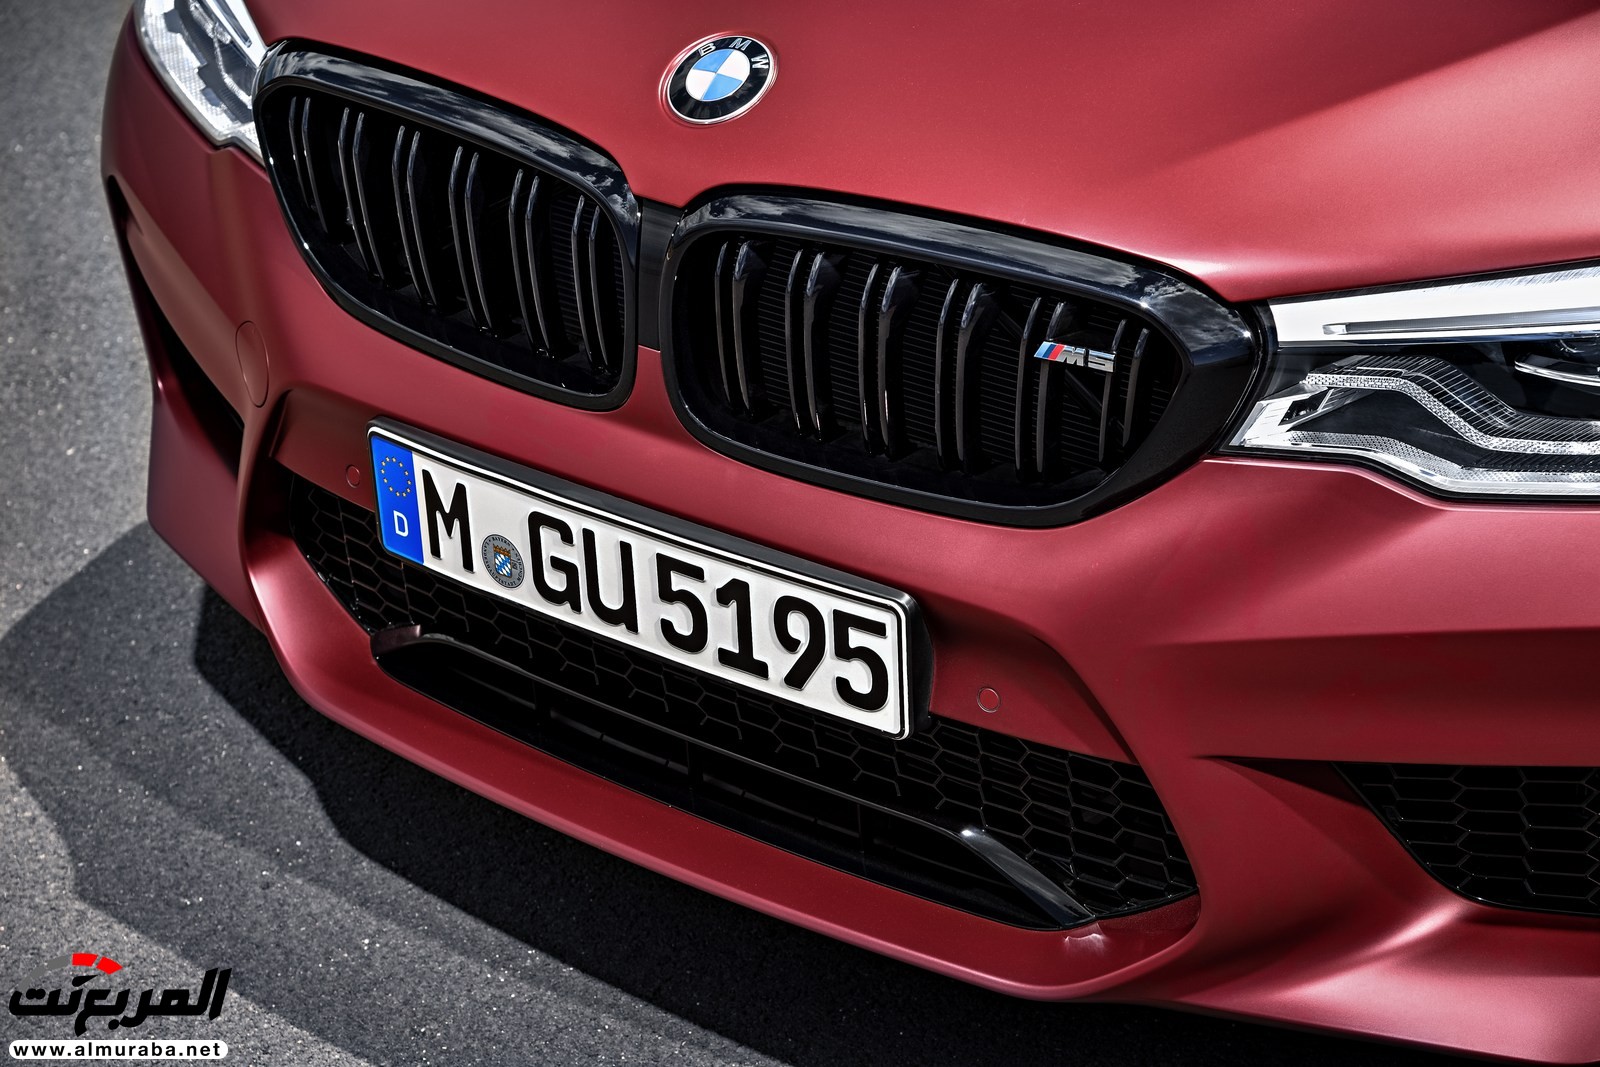 بي ام دبليو M5 2018 تكشف نفسها رسمياً بقوة ٦٠٠ حصان "صور ومواصفات" BMW 47